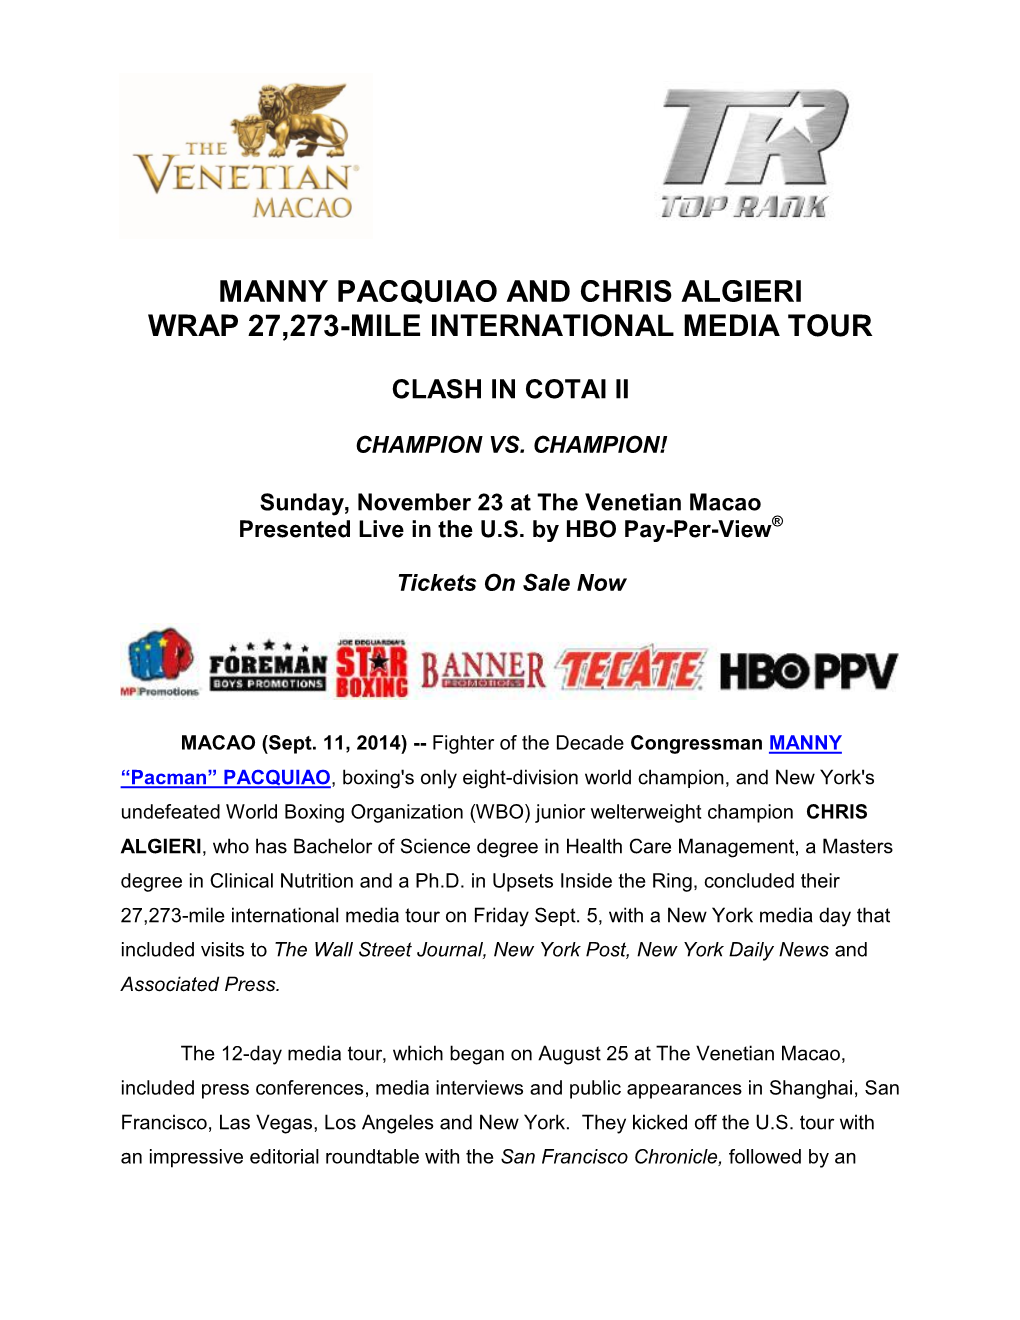 Manny Pacquiao and Chris Algieri Wrap 27273-Mile International Media Tour